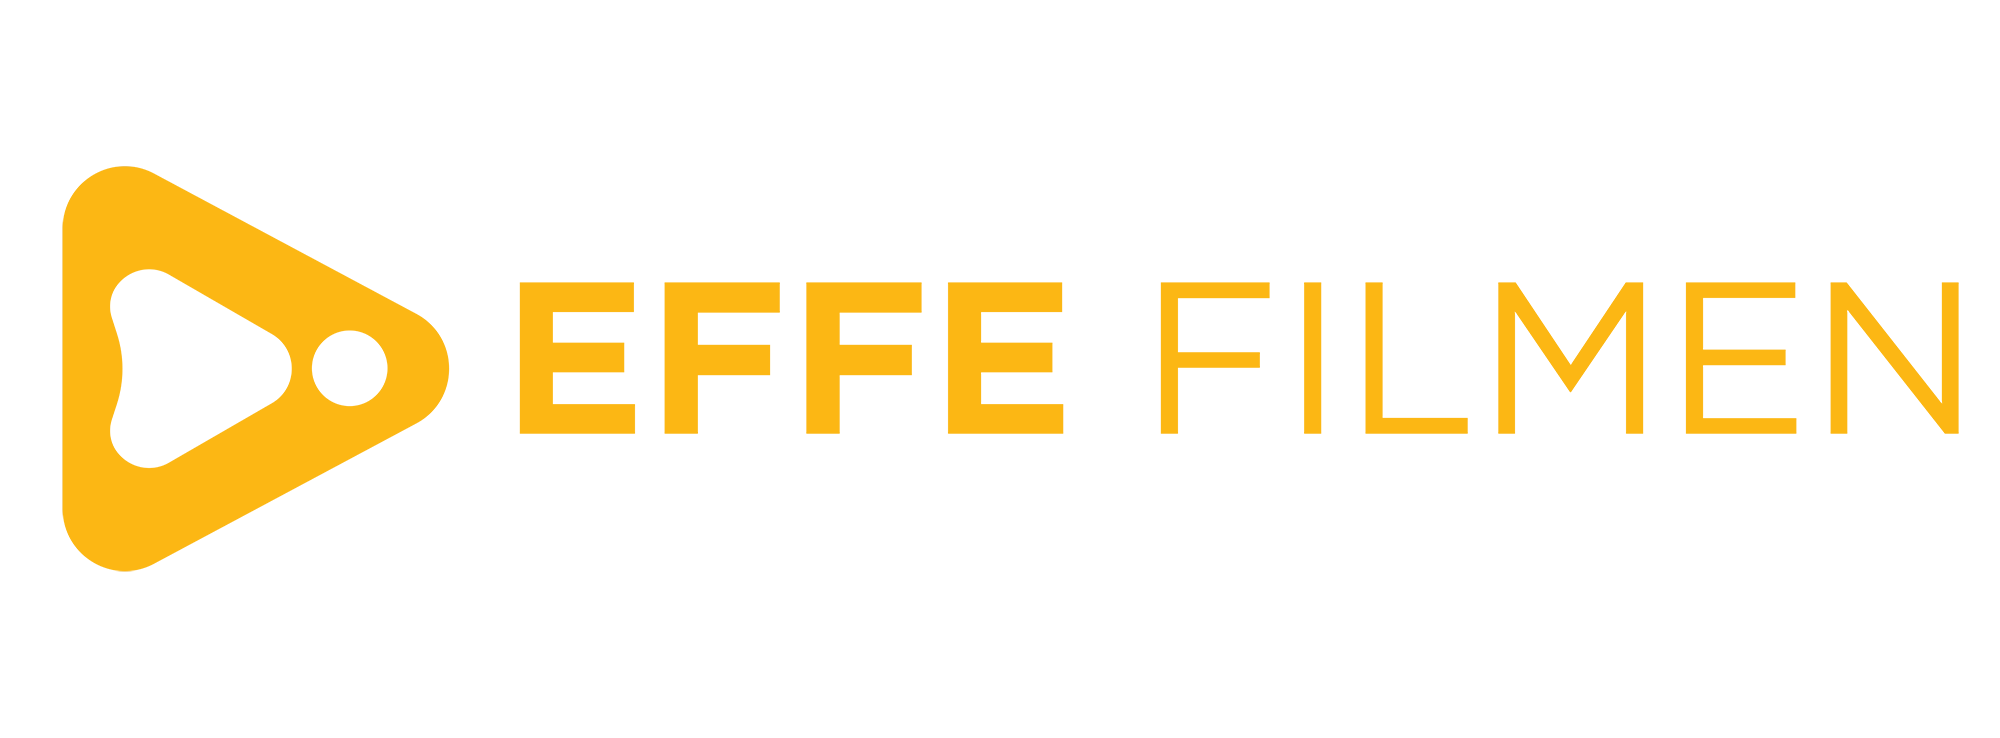 Effe filmen logo lang web